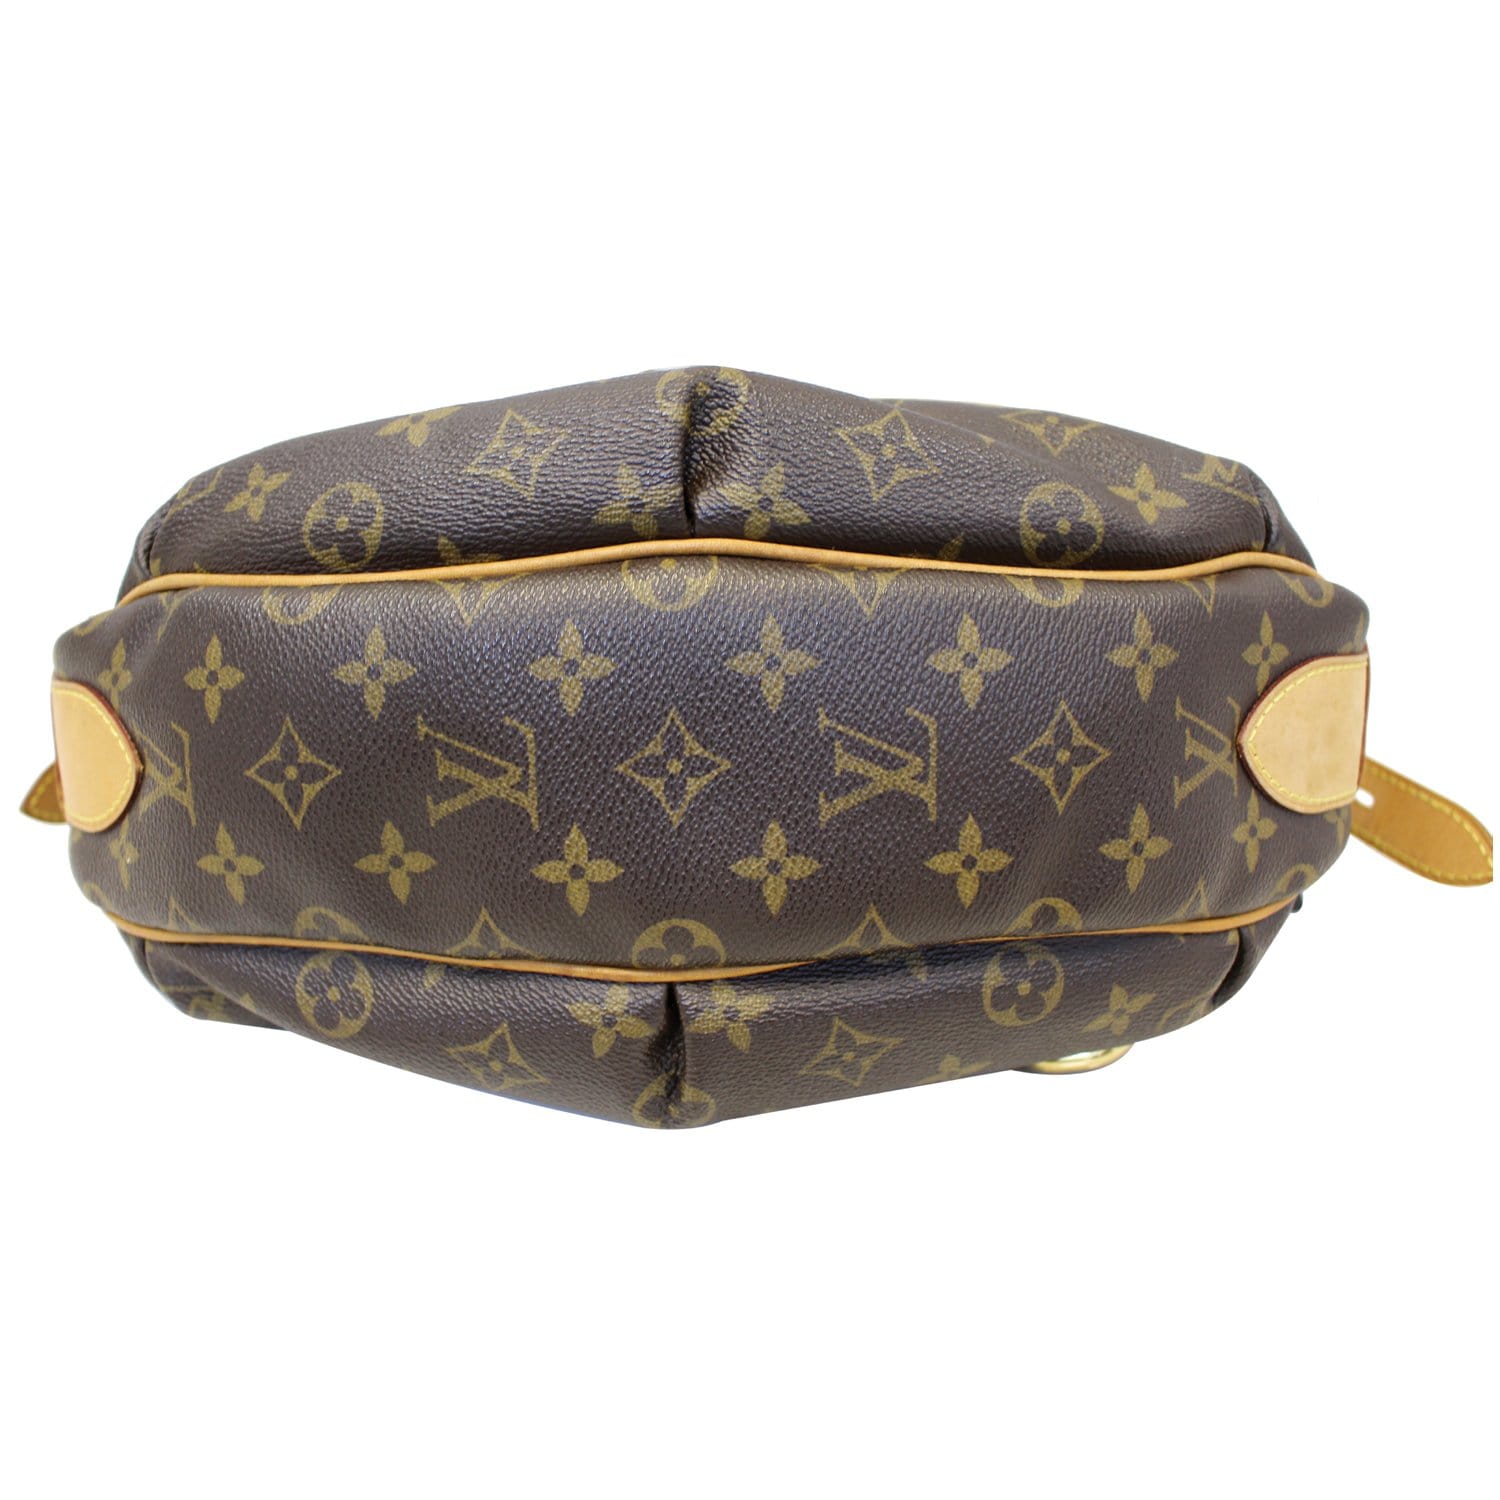 Buy Louis Vuitton tulum Gm Monogram Shoulder Bag